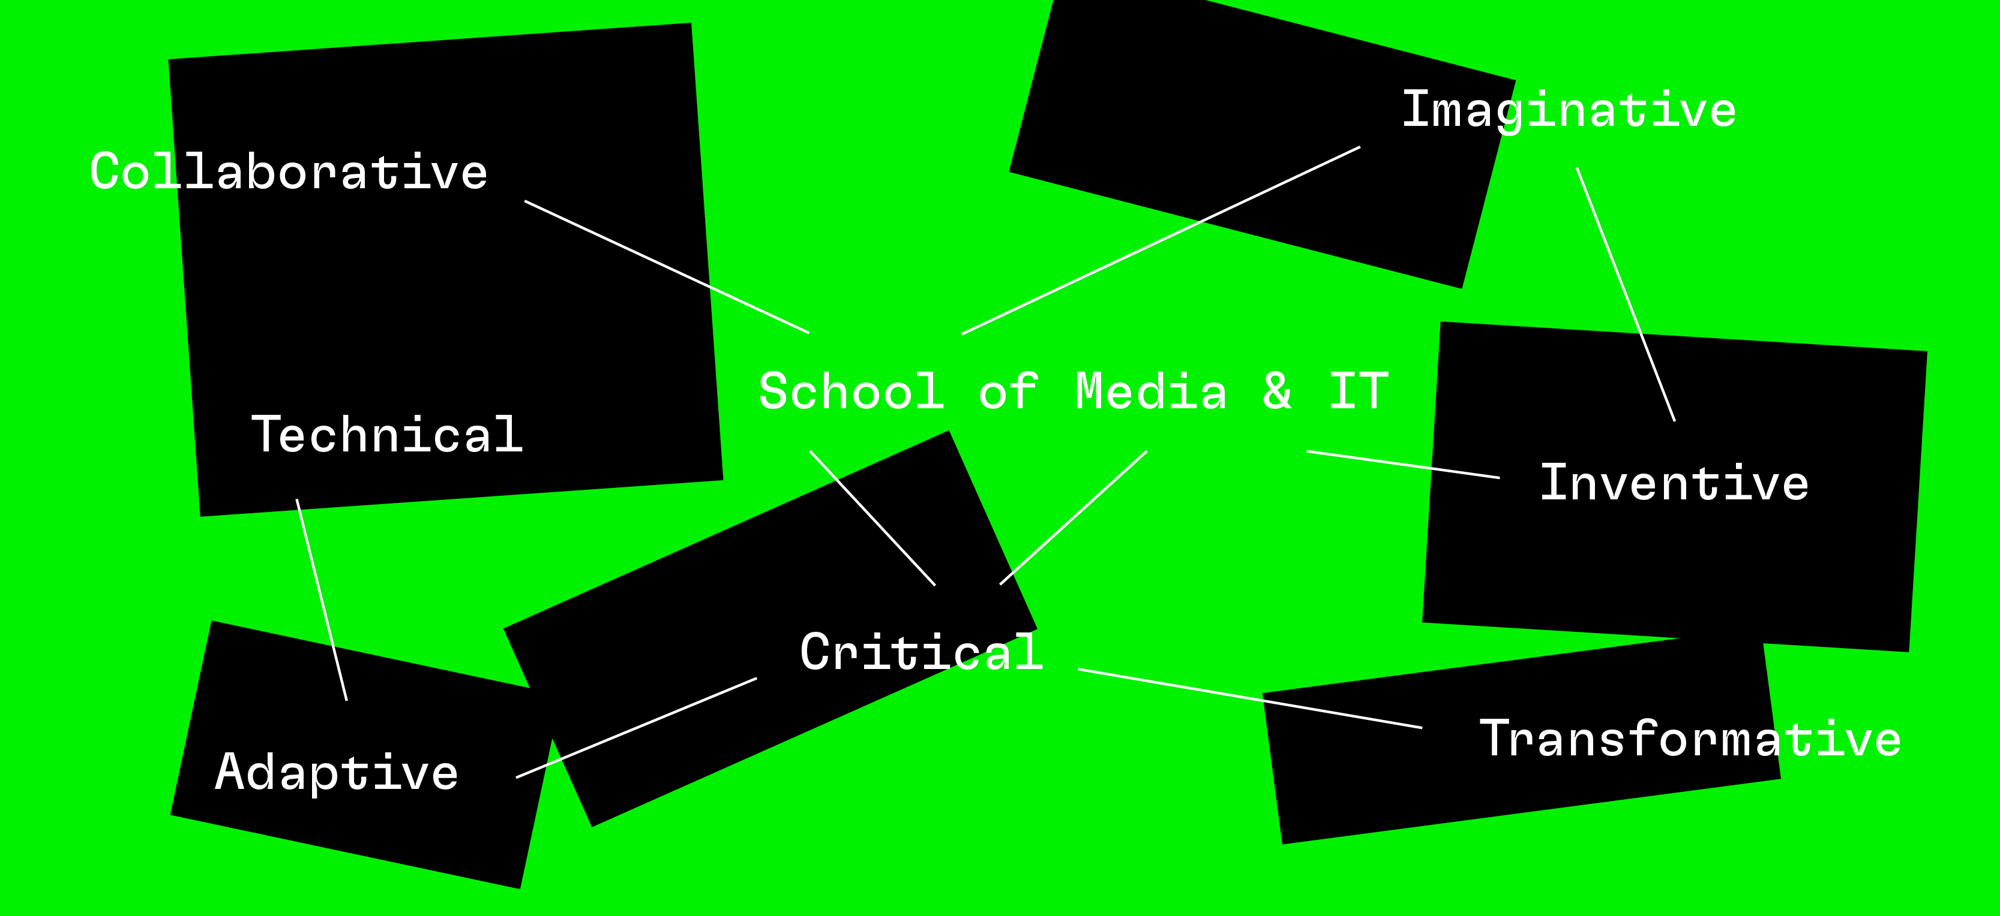 School of Media & IT